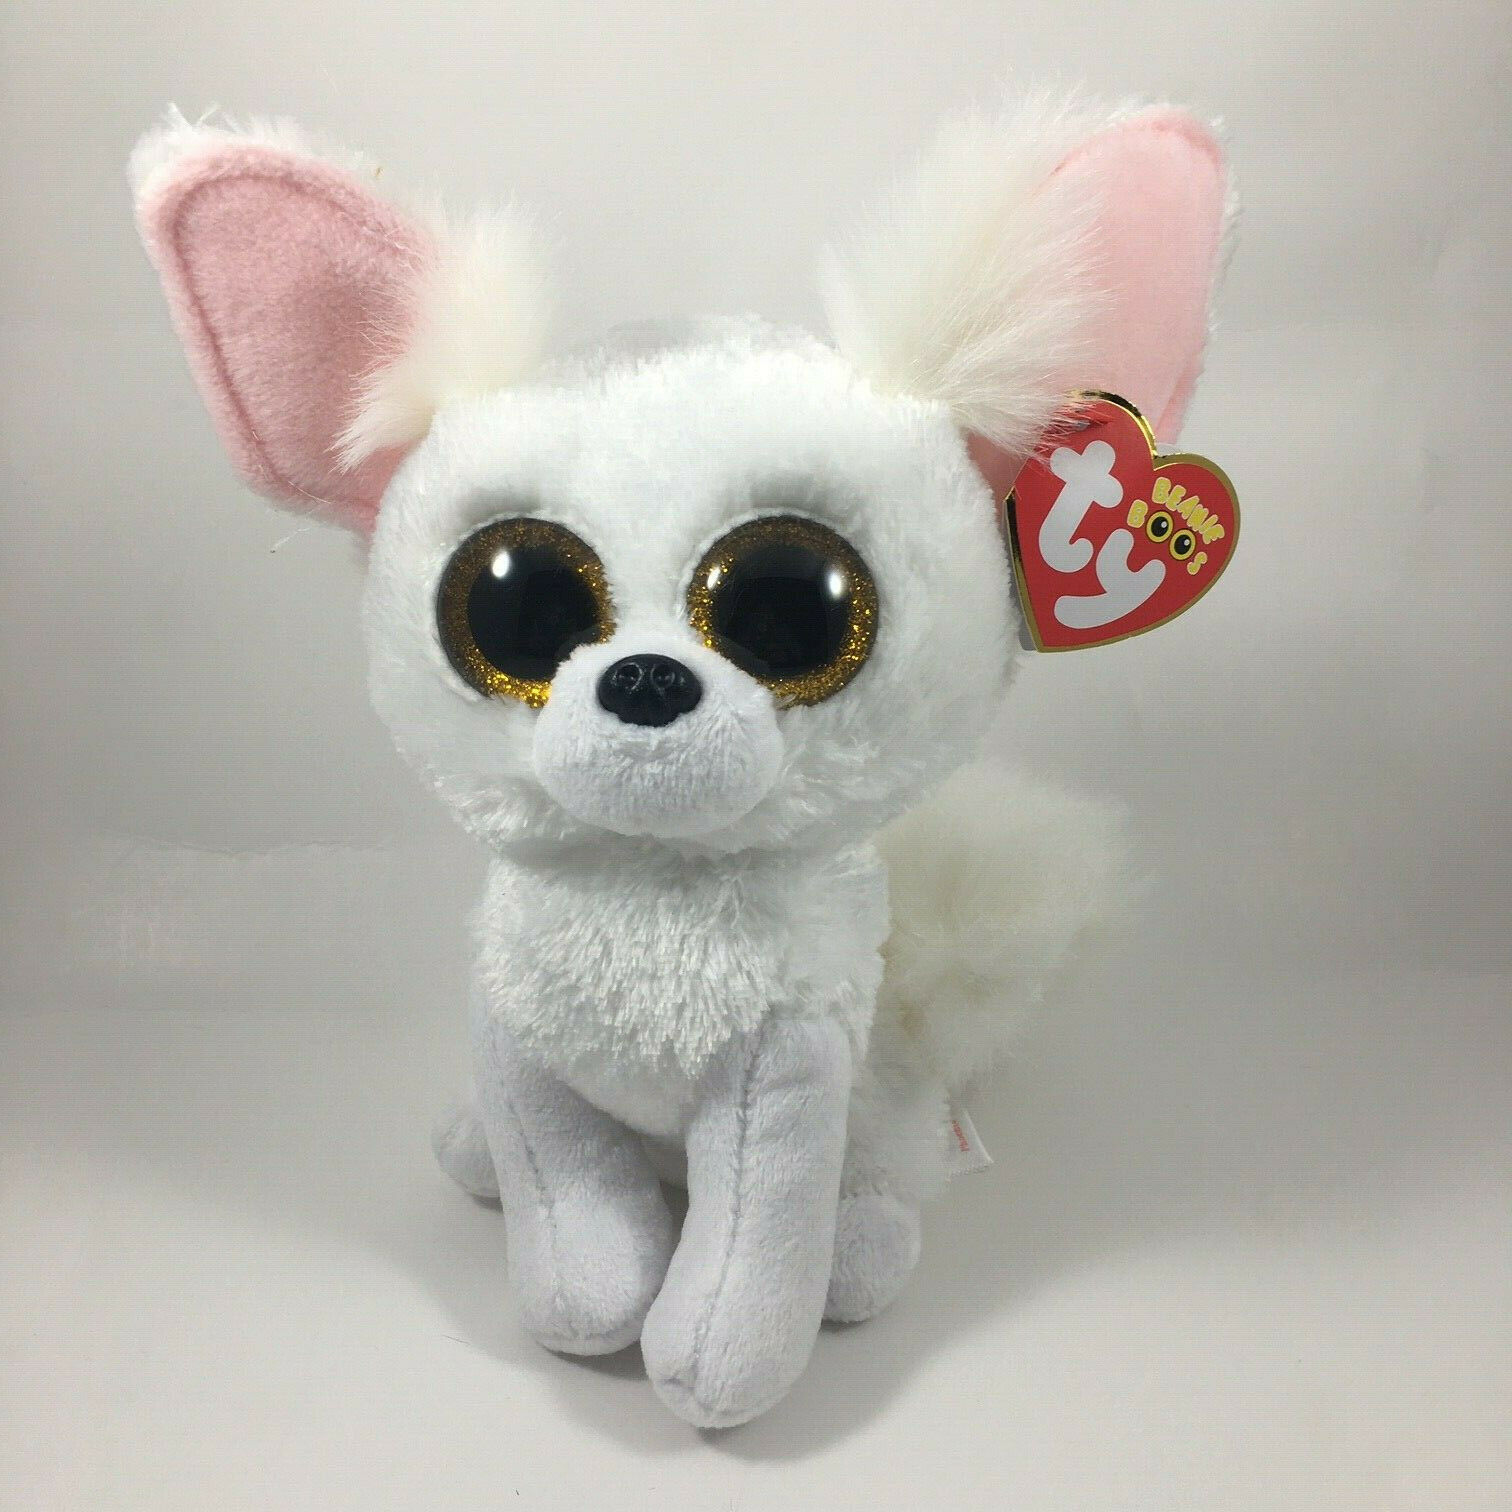 2020 Ty Beanie Boos 6" Phoenix White Fennec Fox Stuffed Animal Toy Plush Mwmts